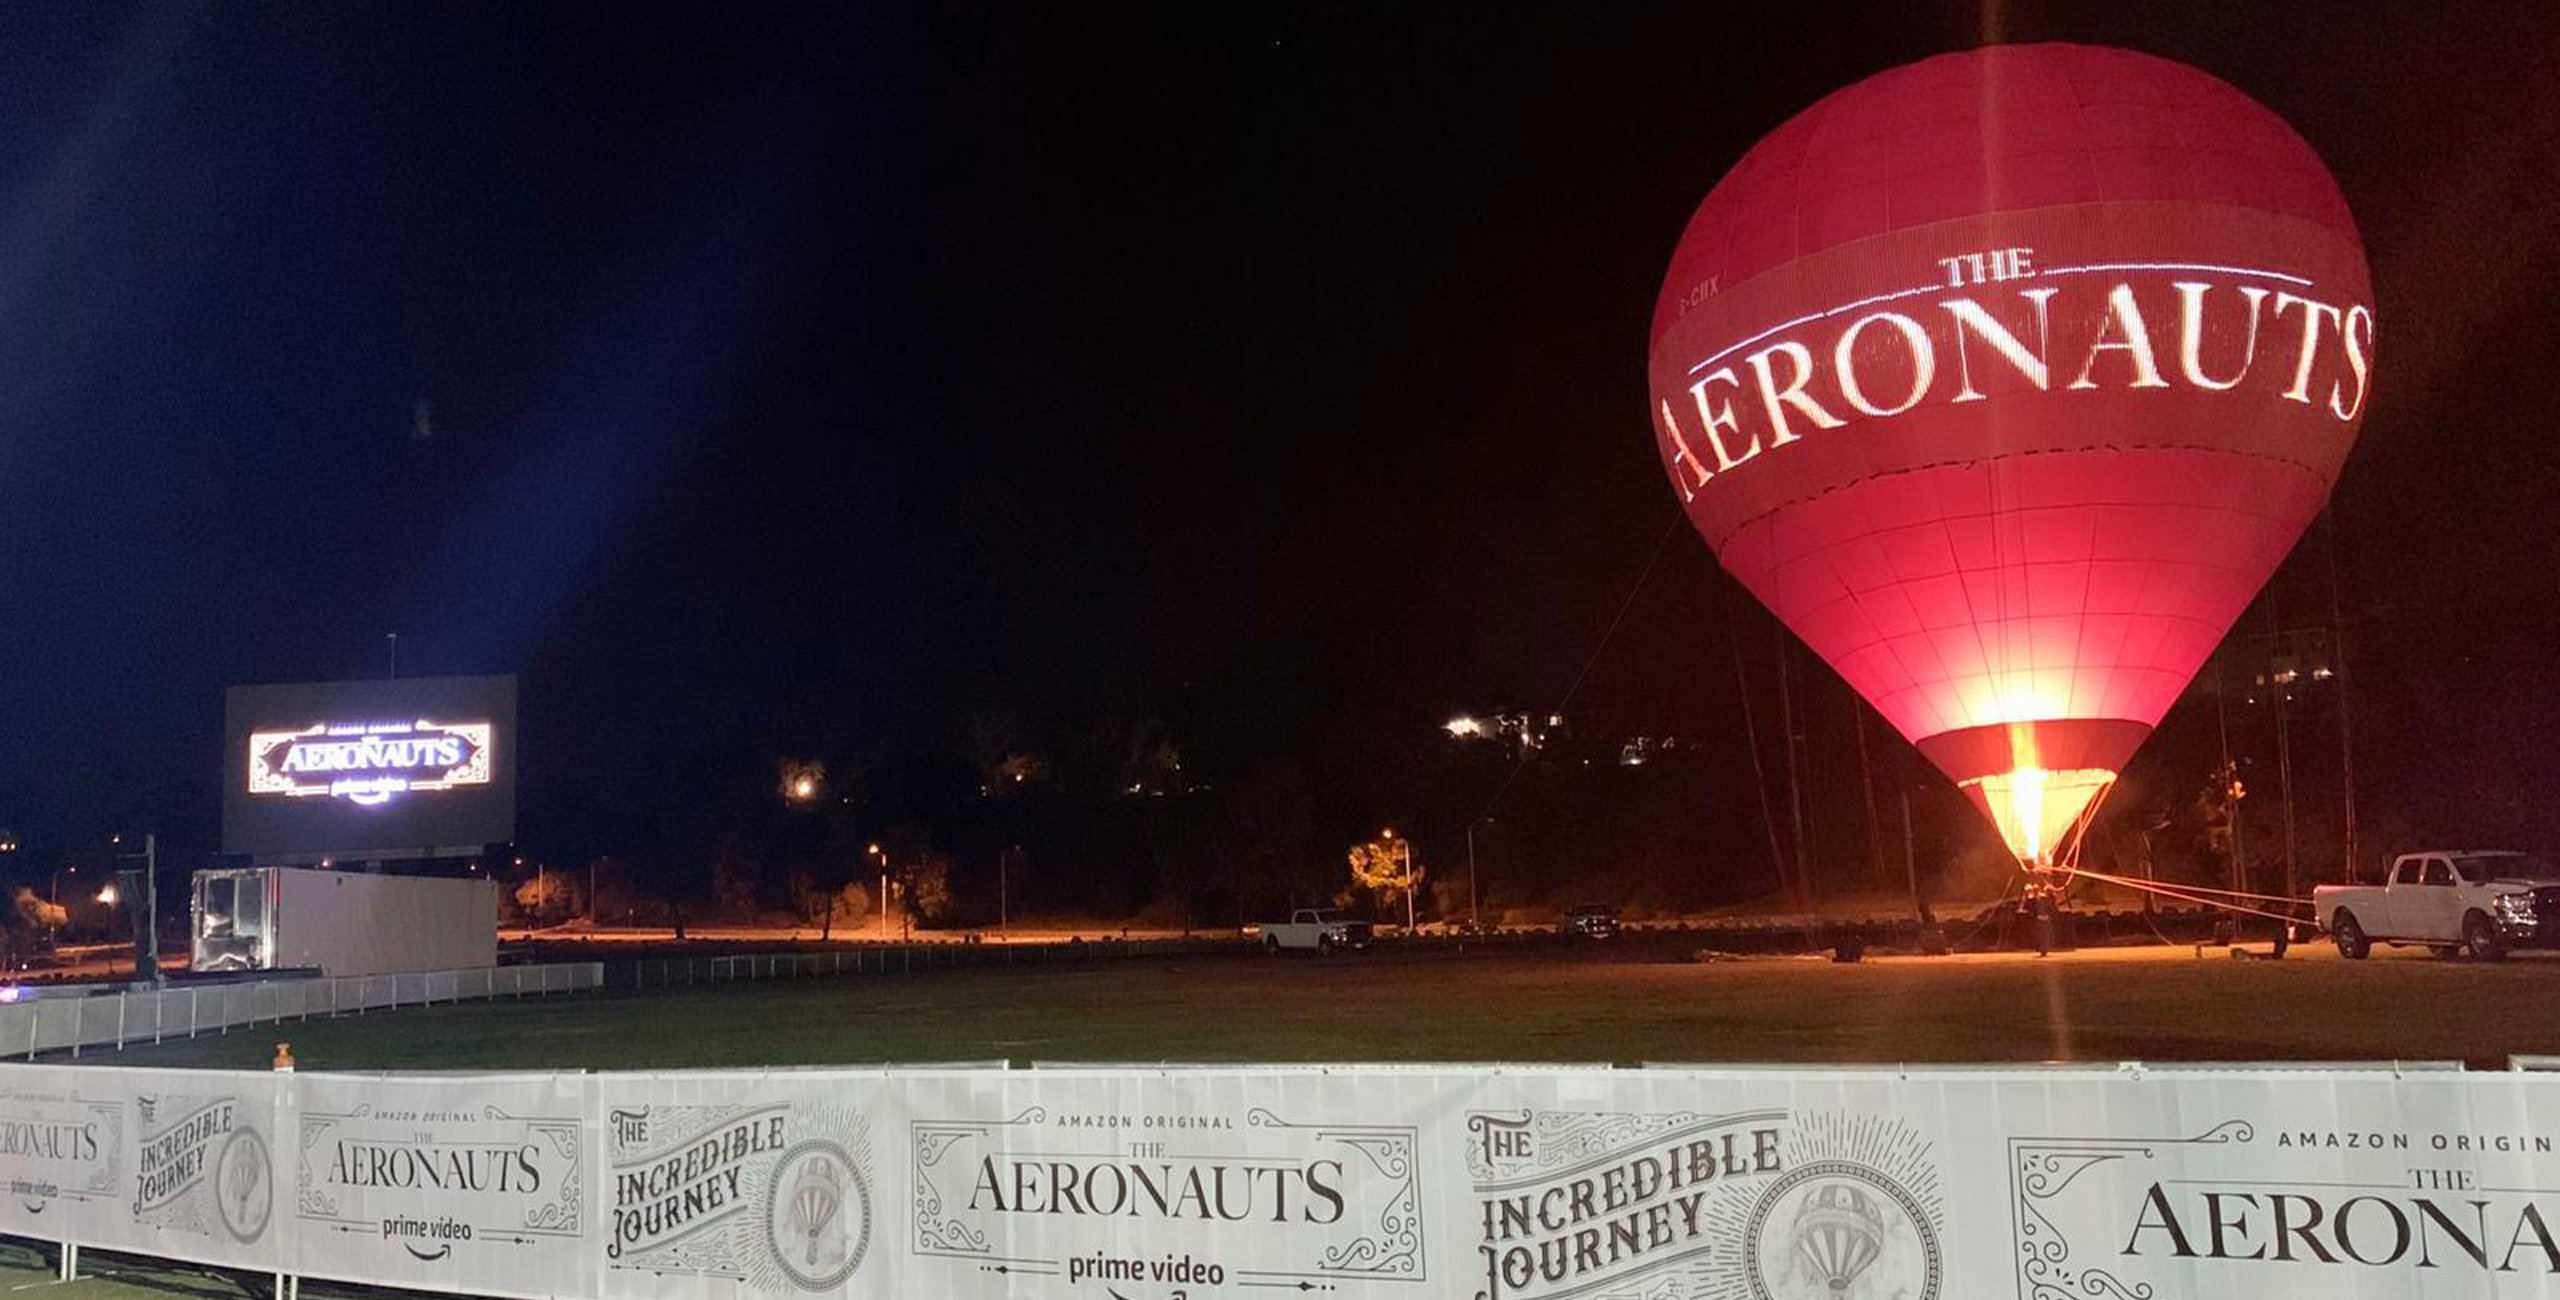 Digital display hot air balloon, The Aeronauts, Amazon Prime